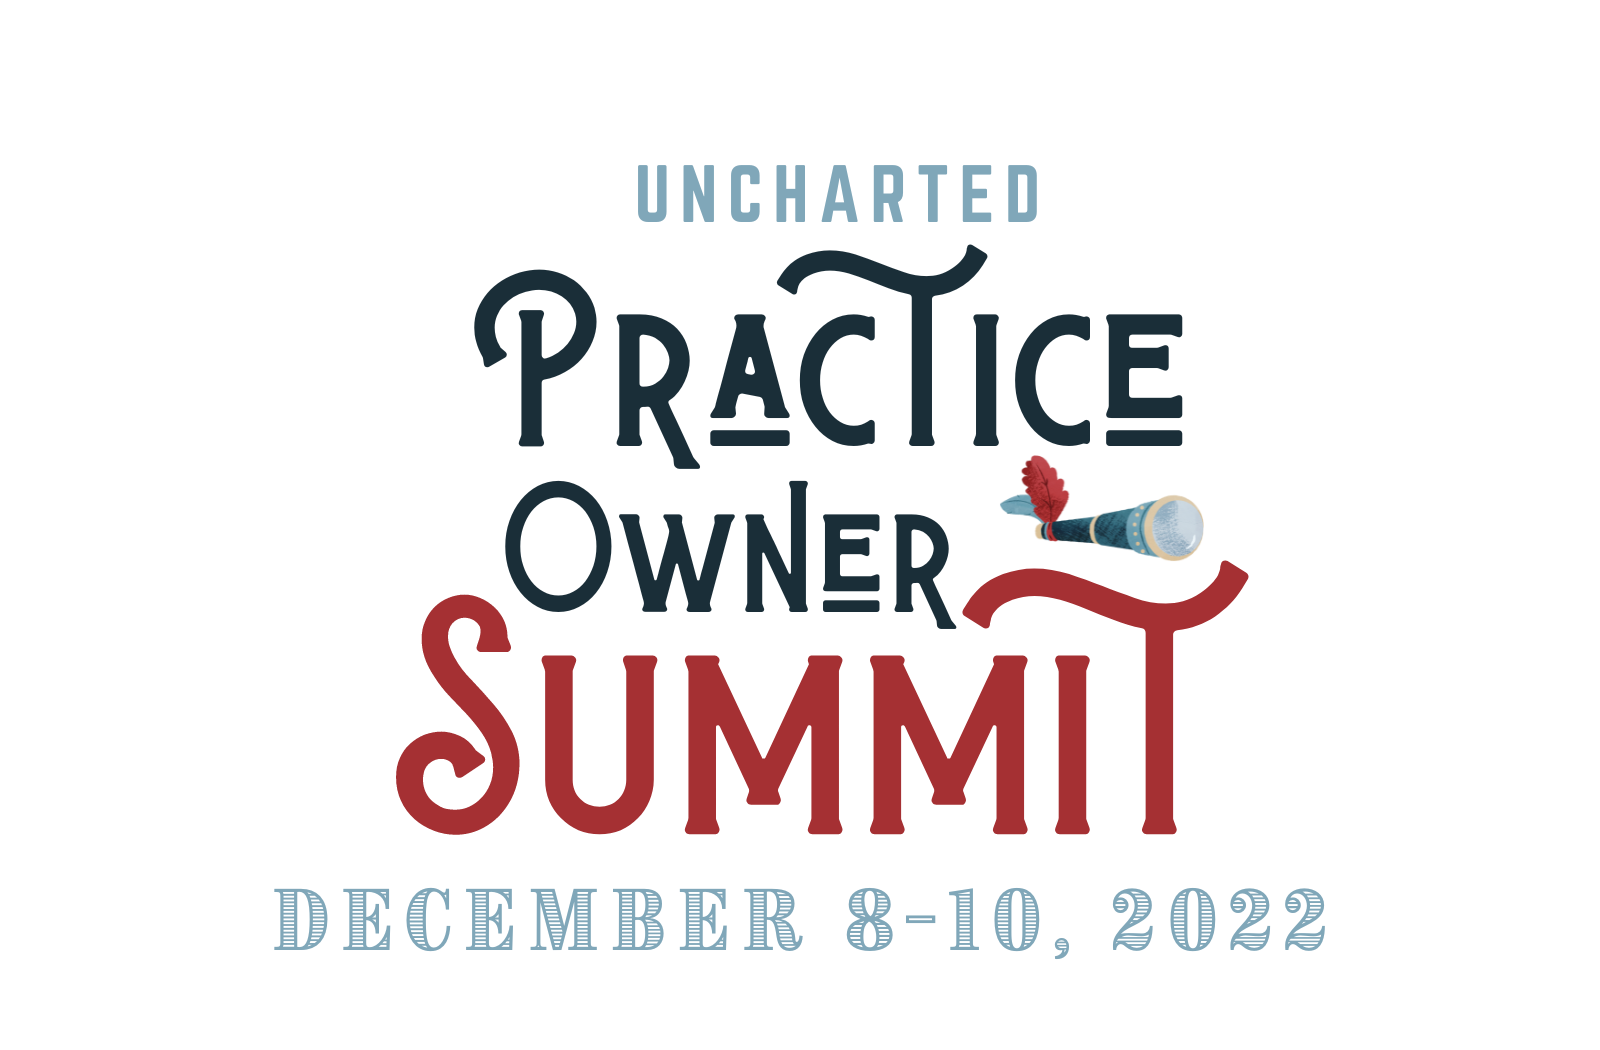 text practice owner summit